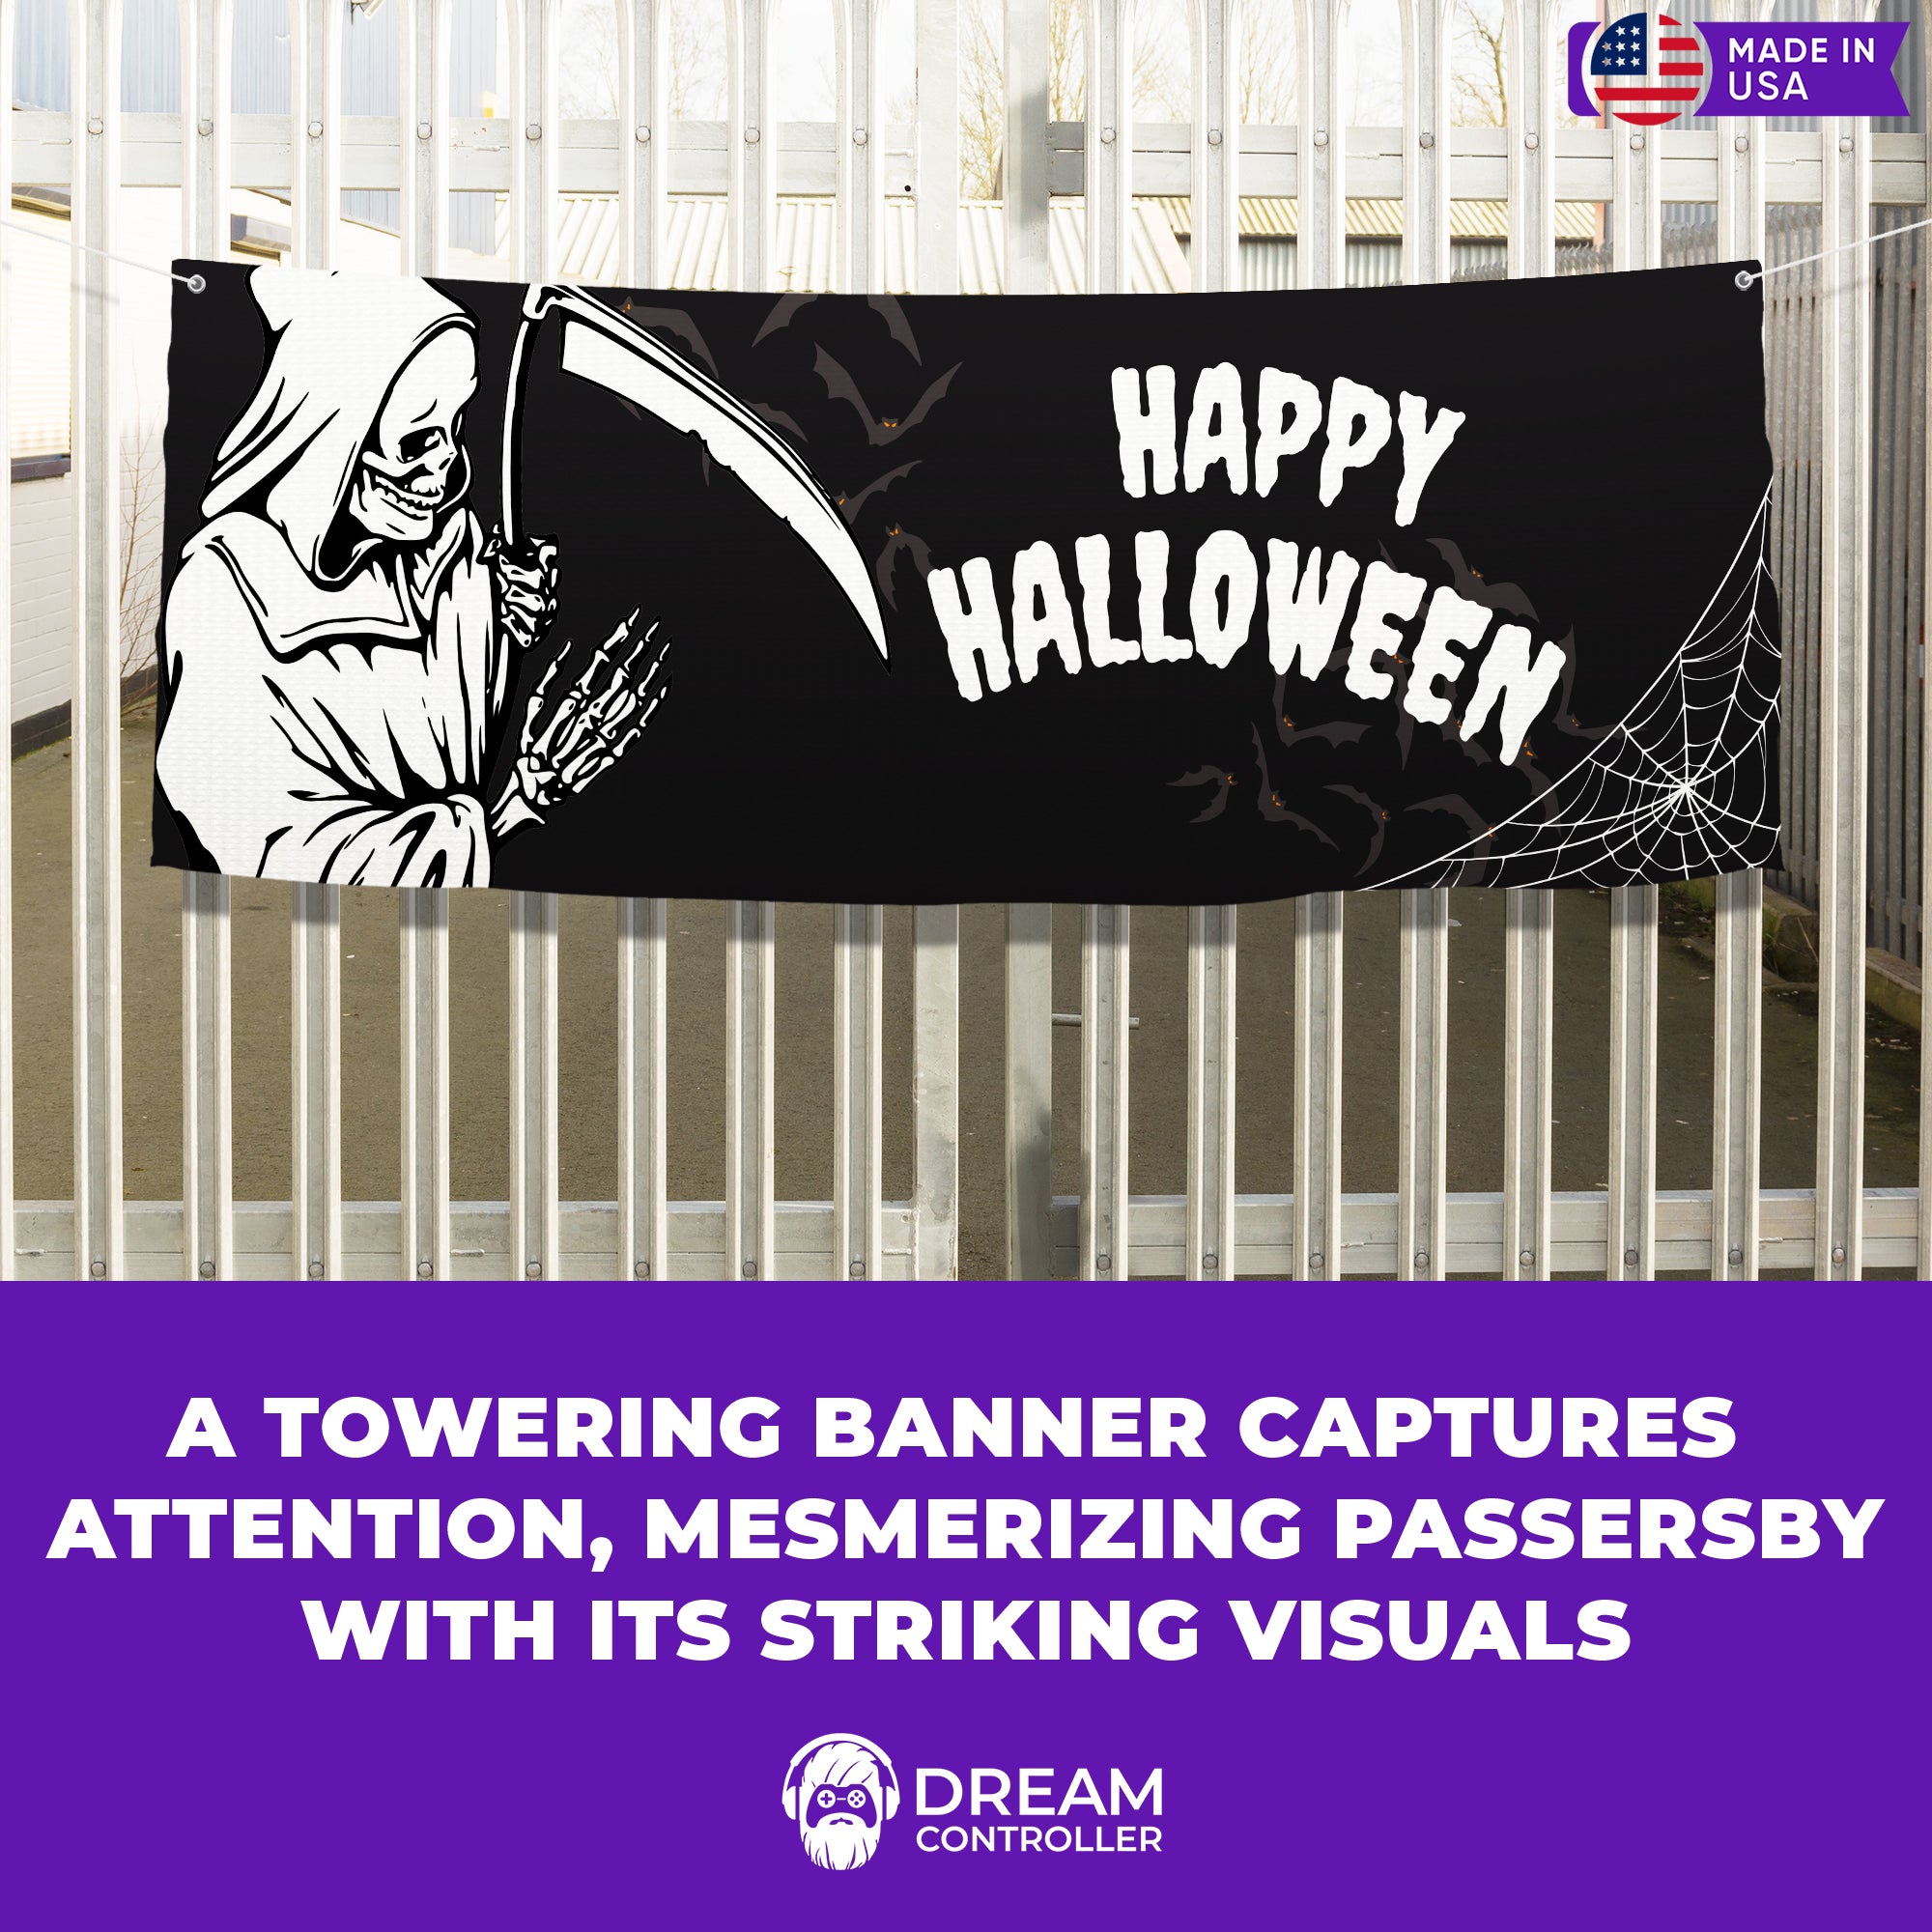 Reaper's Halloween Banner - Stunning Visual Impact, Sturdy Grommets, Versatile Display Options